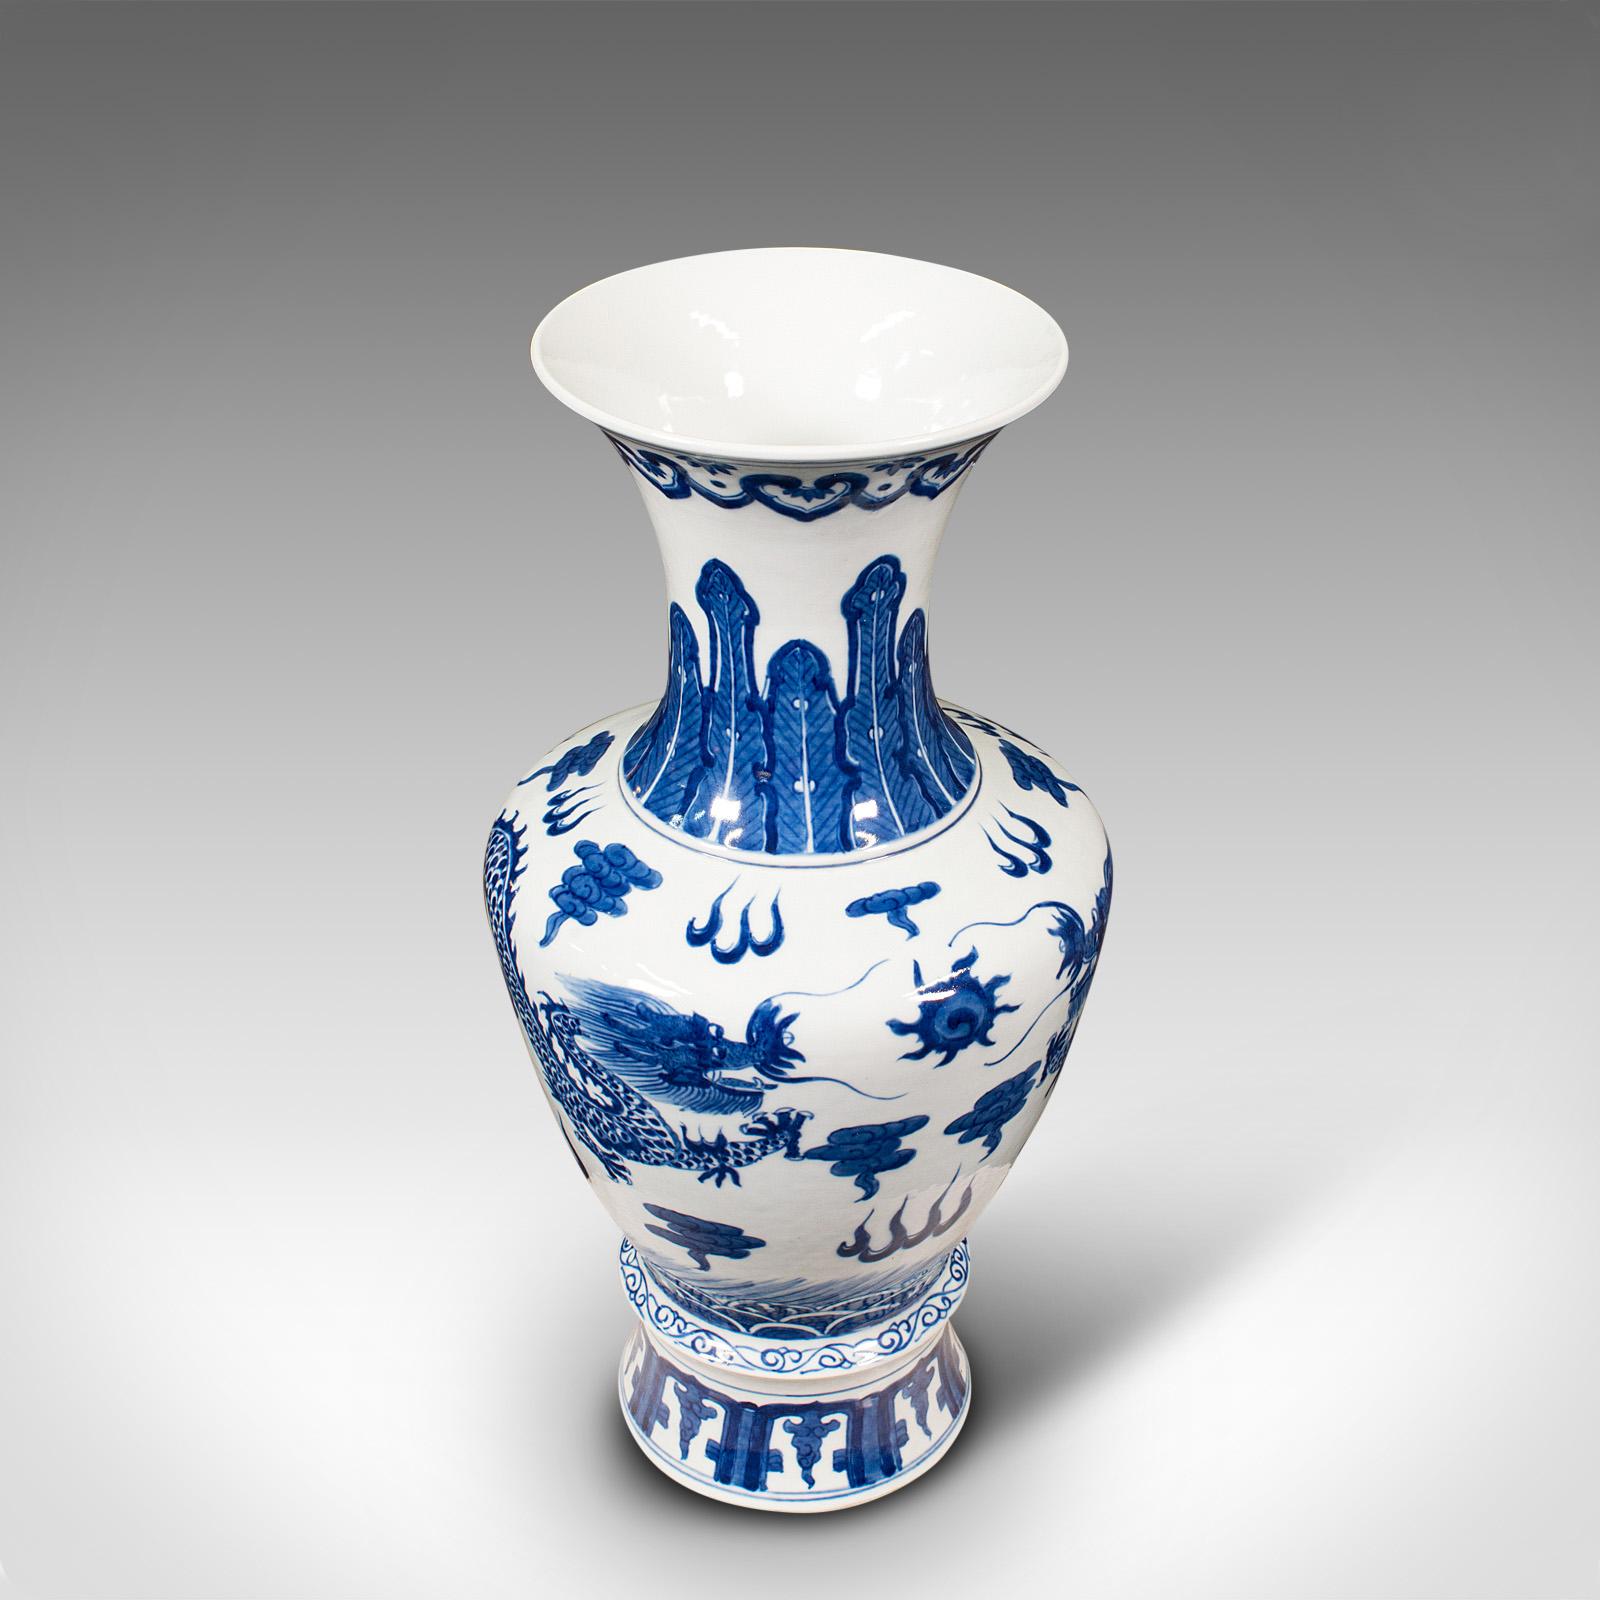 Tall Vintage White & Blue Vase, Chinese, Ceramic, Decorative, Flower, Art Deco For Sale 3